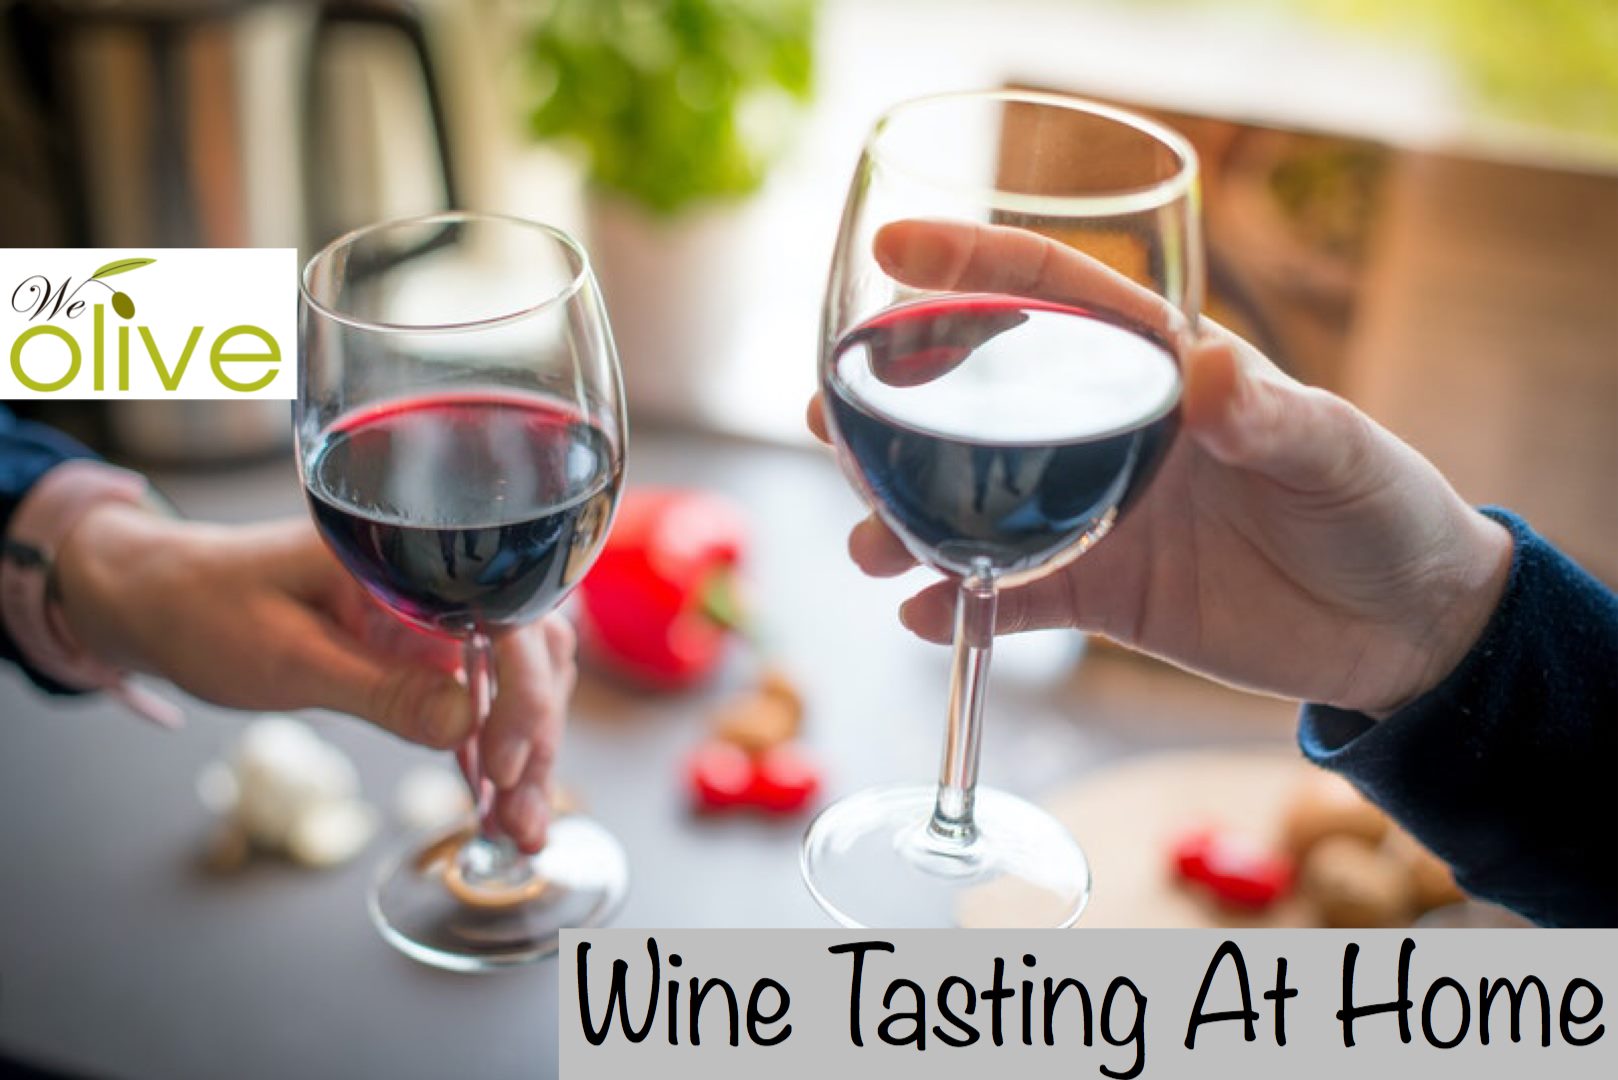 Virtual Wine Tasting With We Olive Wine Bar Shreveport